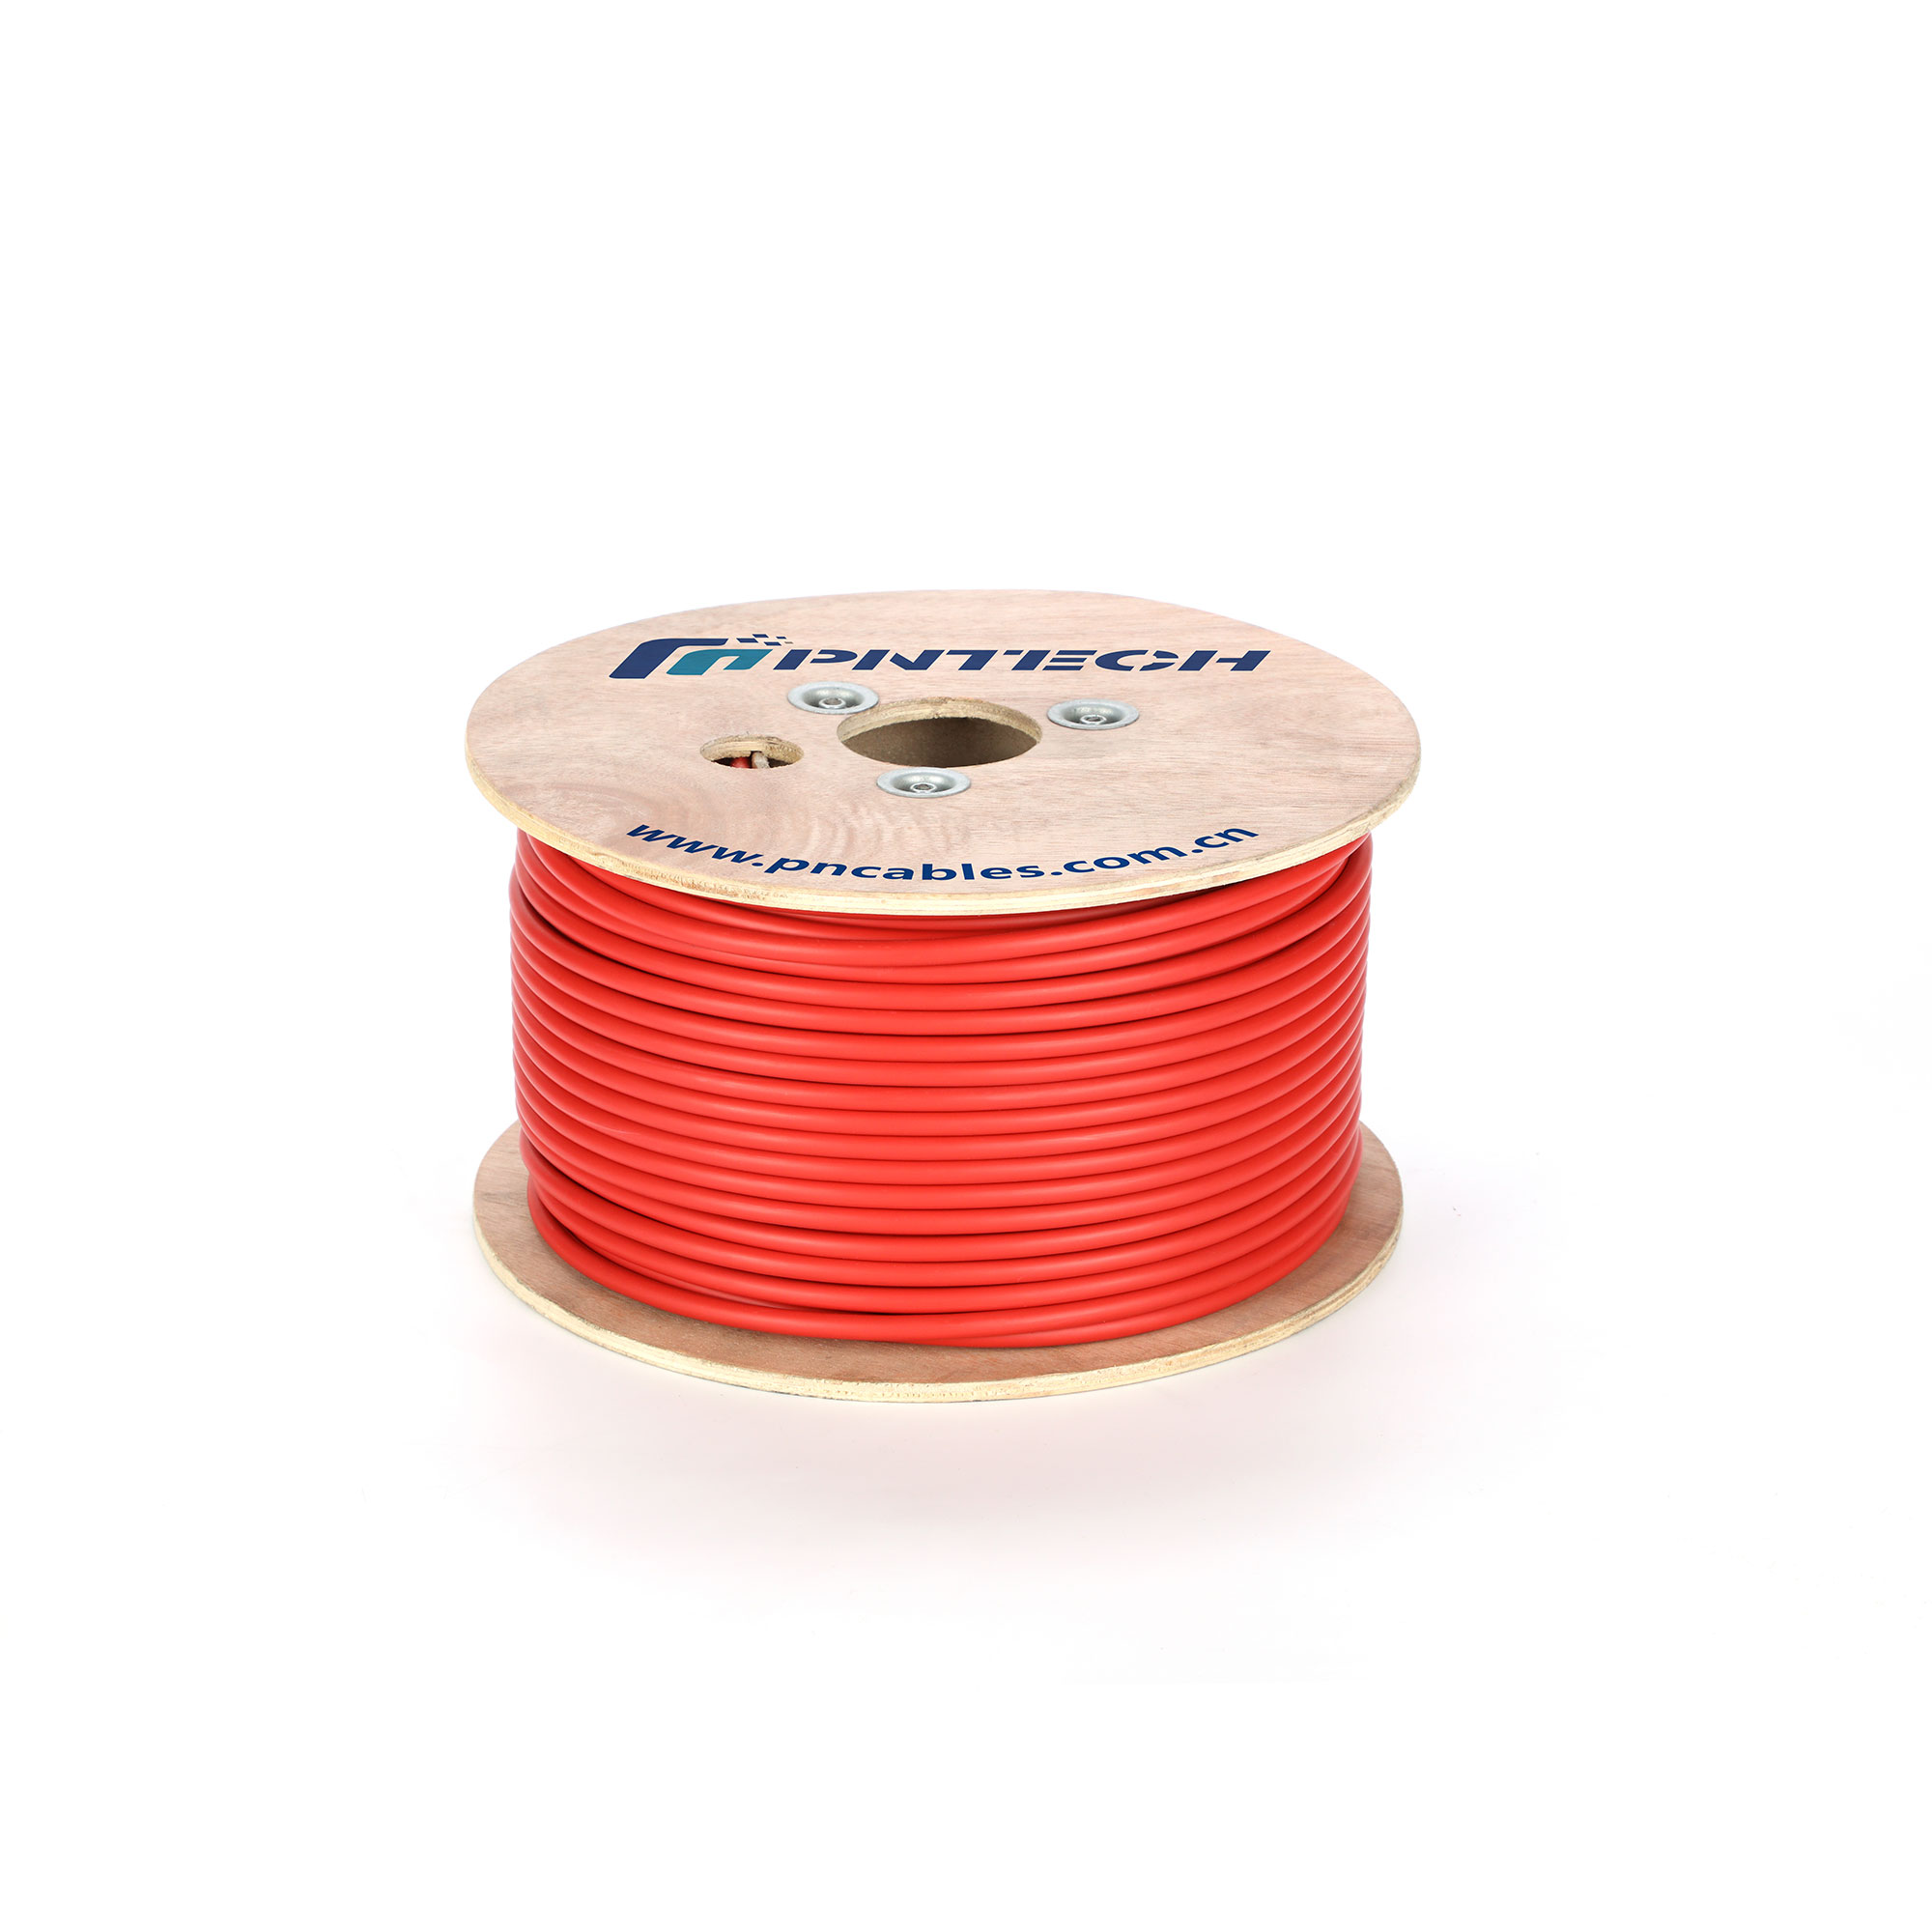 XLPO hot sale of photovoltaic cable 62930 IEC131 4mm2